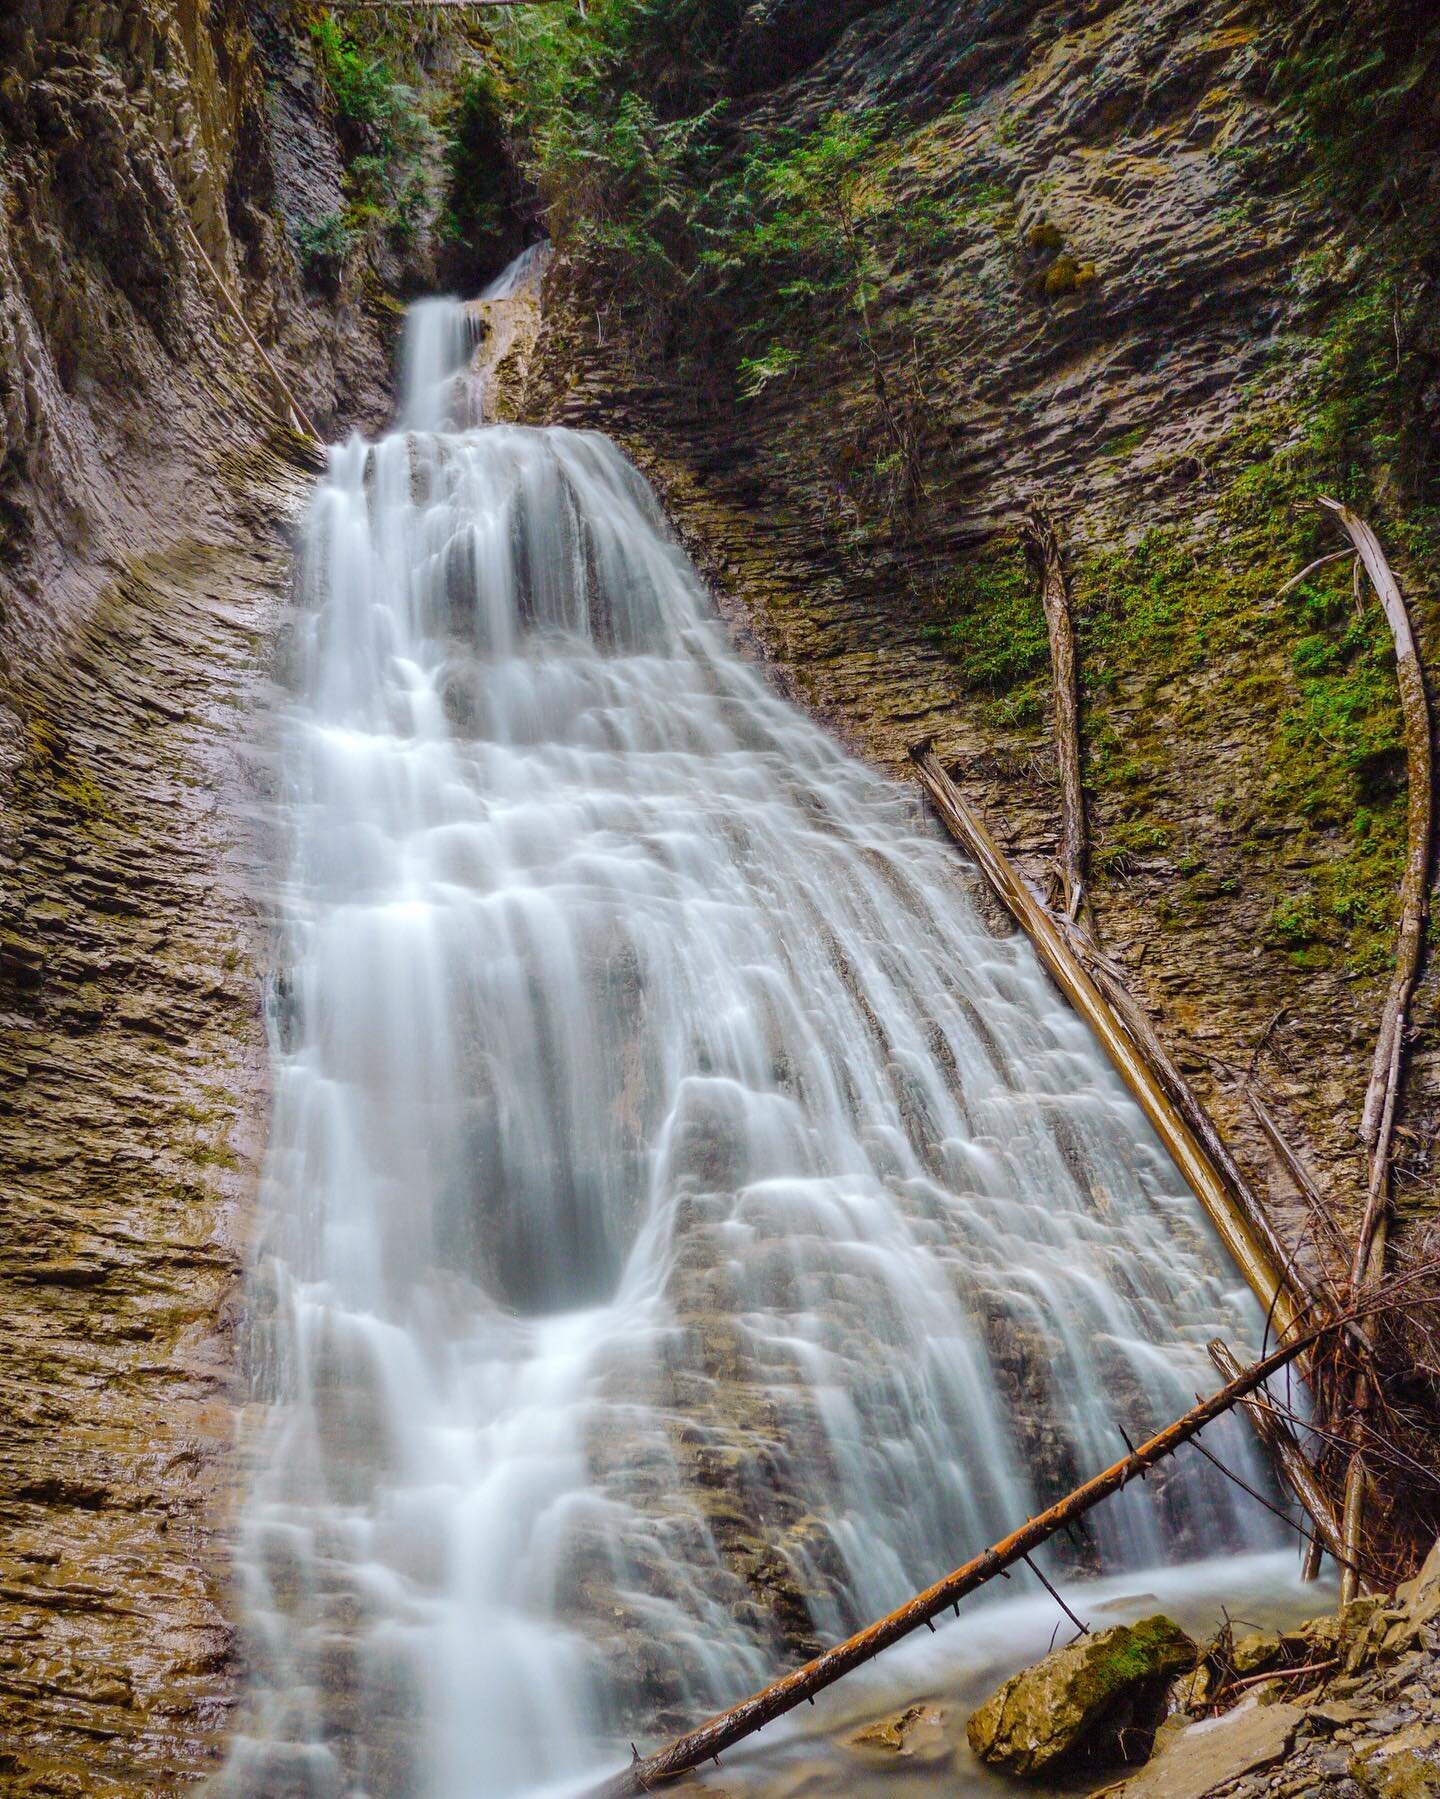 Margaret Falls in the Shuswap region of BC 

#waterfall #bc #canada #shuswap